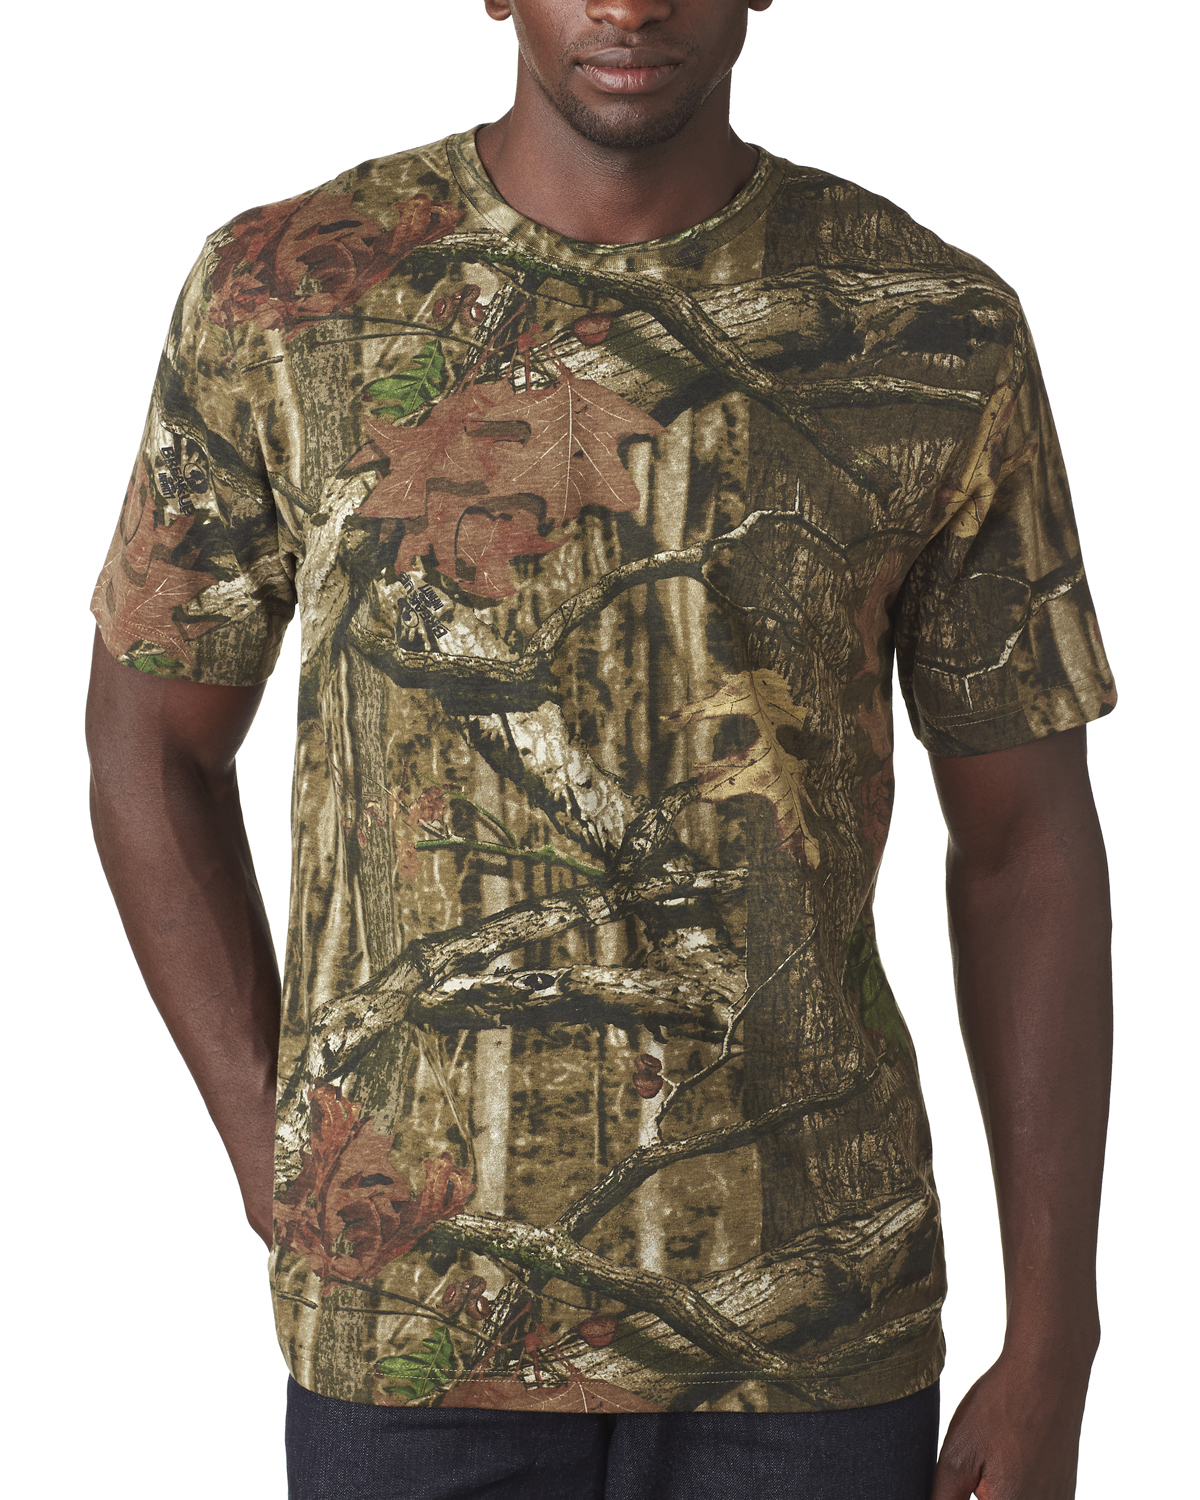 MOSSY OAK Break Up infinity short sleeve T-shirt CAMO camouflage 100% cotton XL 